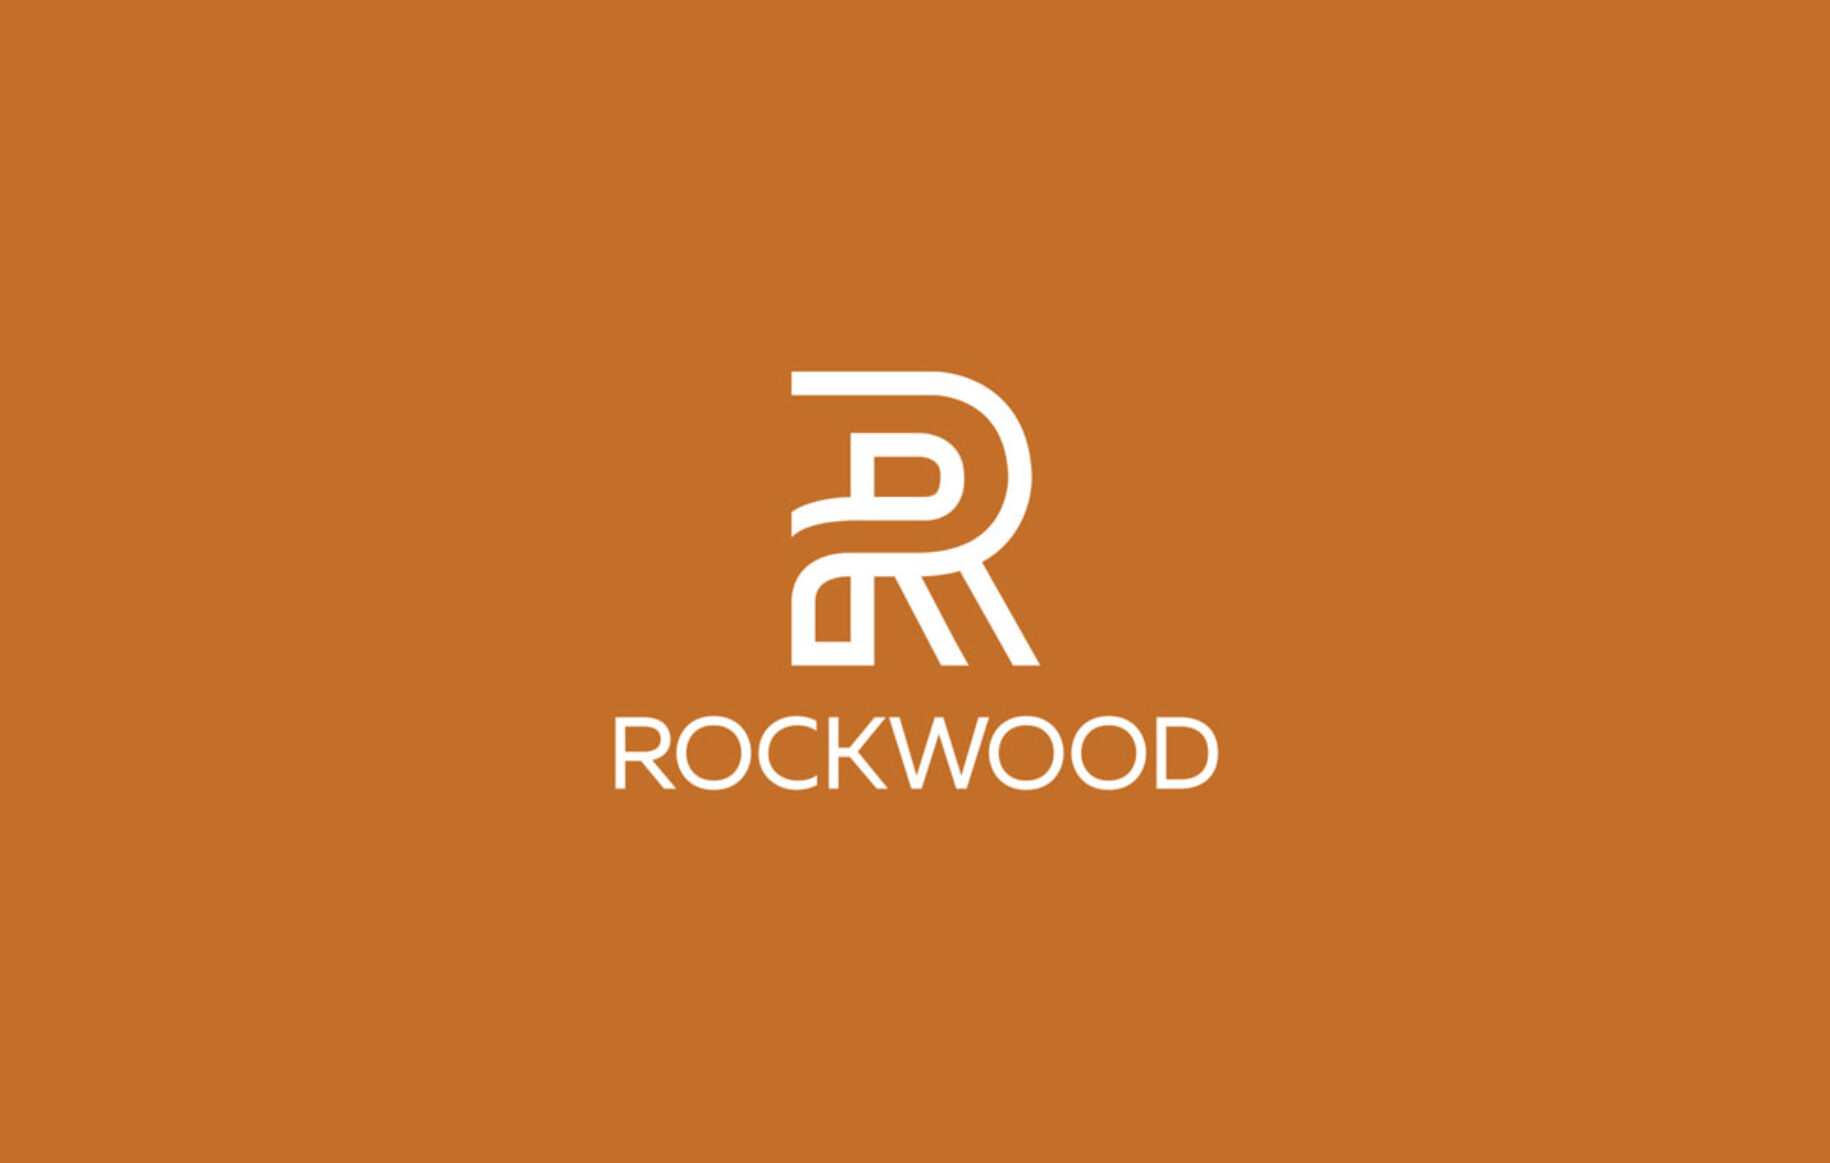 Rockwood logo in white